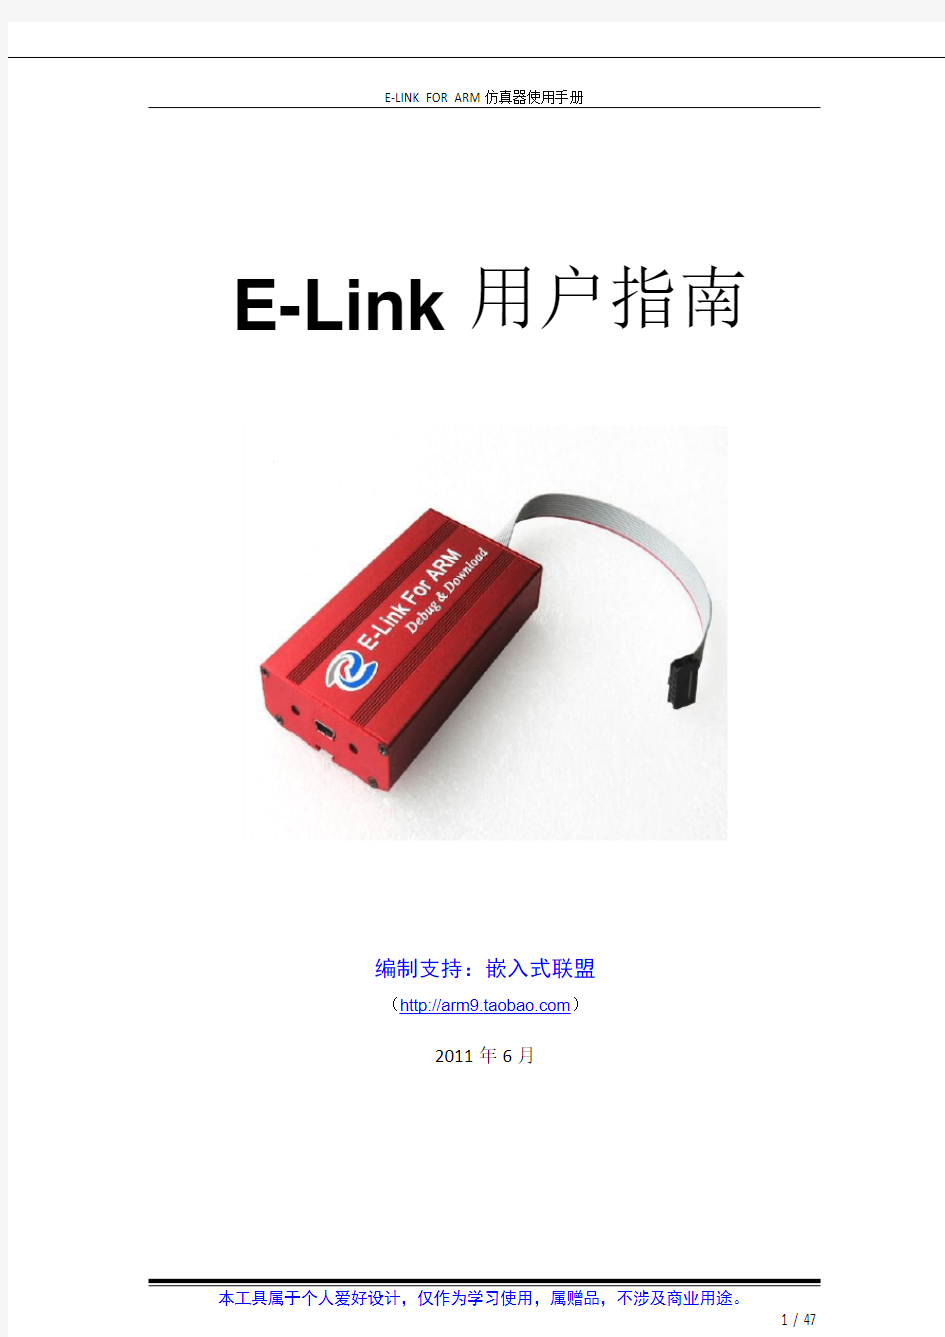 E-LINK ARM 仿真器 JLINK使用手册及固件升级